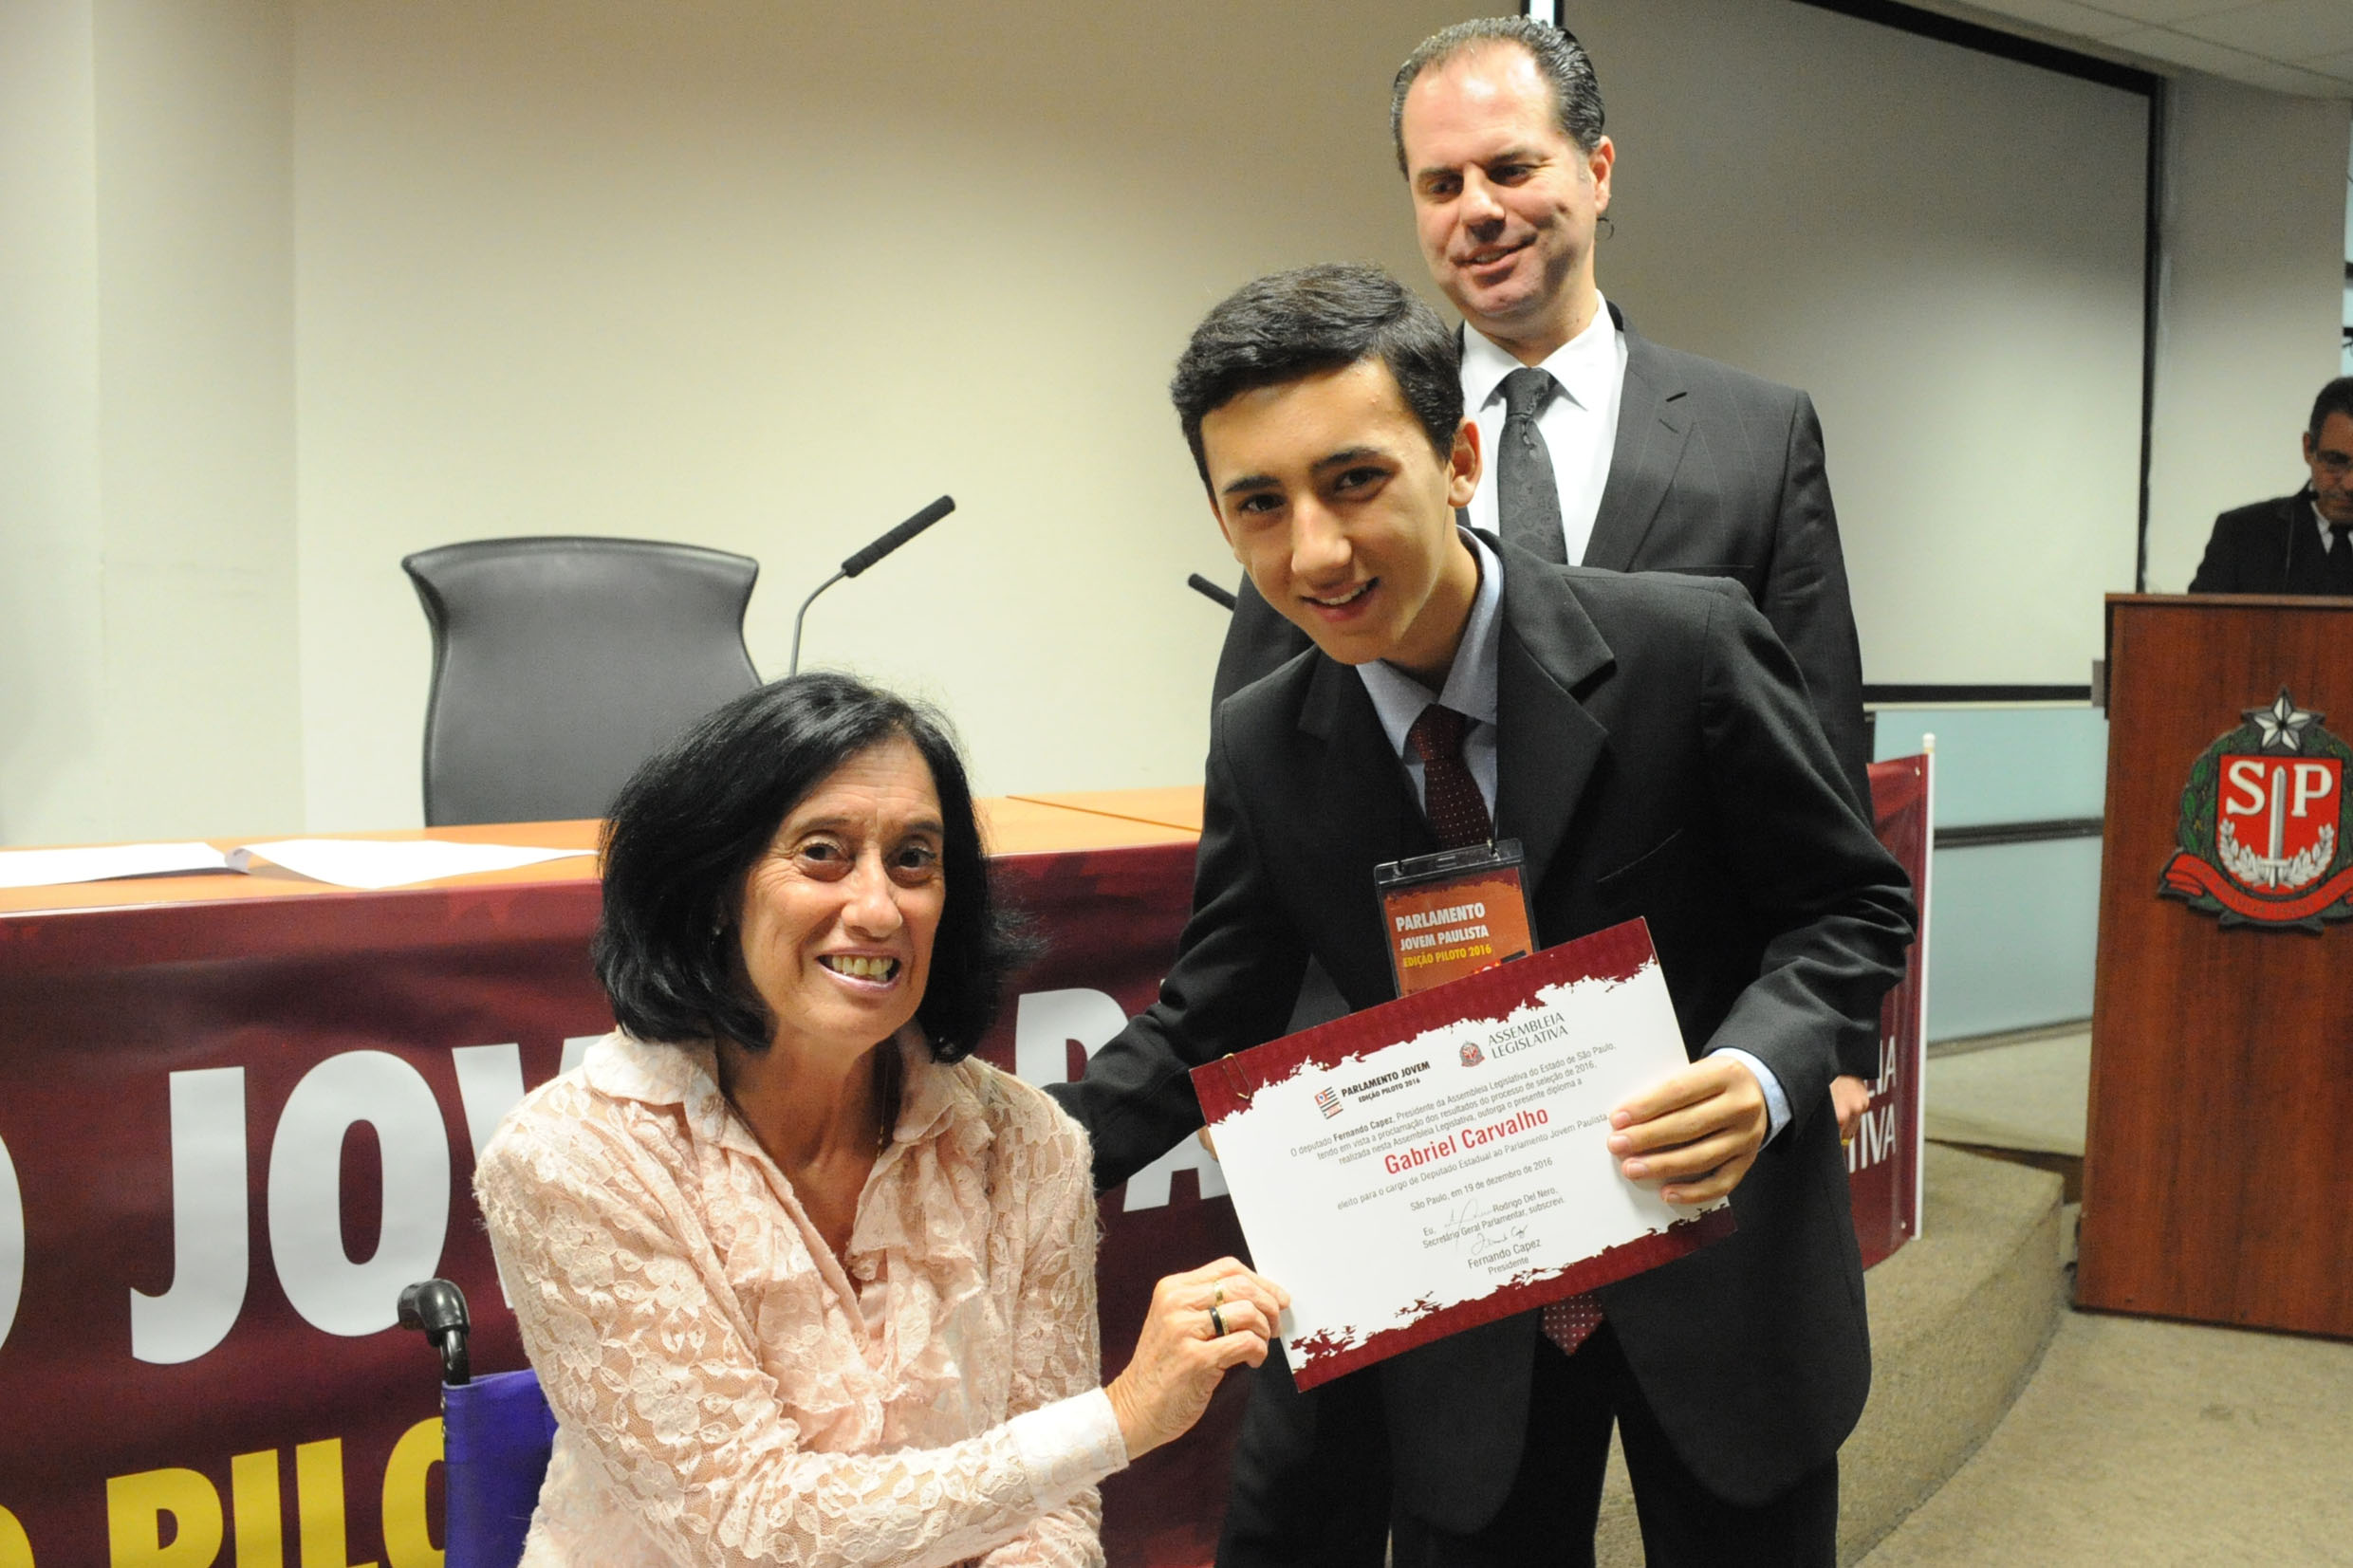 Gabriel Carvalho recebe diploma <a style='float:right;color:#ccc' href='https://www3.al.sp.gov.br/repositorio/noticia/N-12-2016/fg198076.jpg' target=_blank><i class='bi bi-zoom-in'></i> Clique para ver a imagem </a>